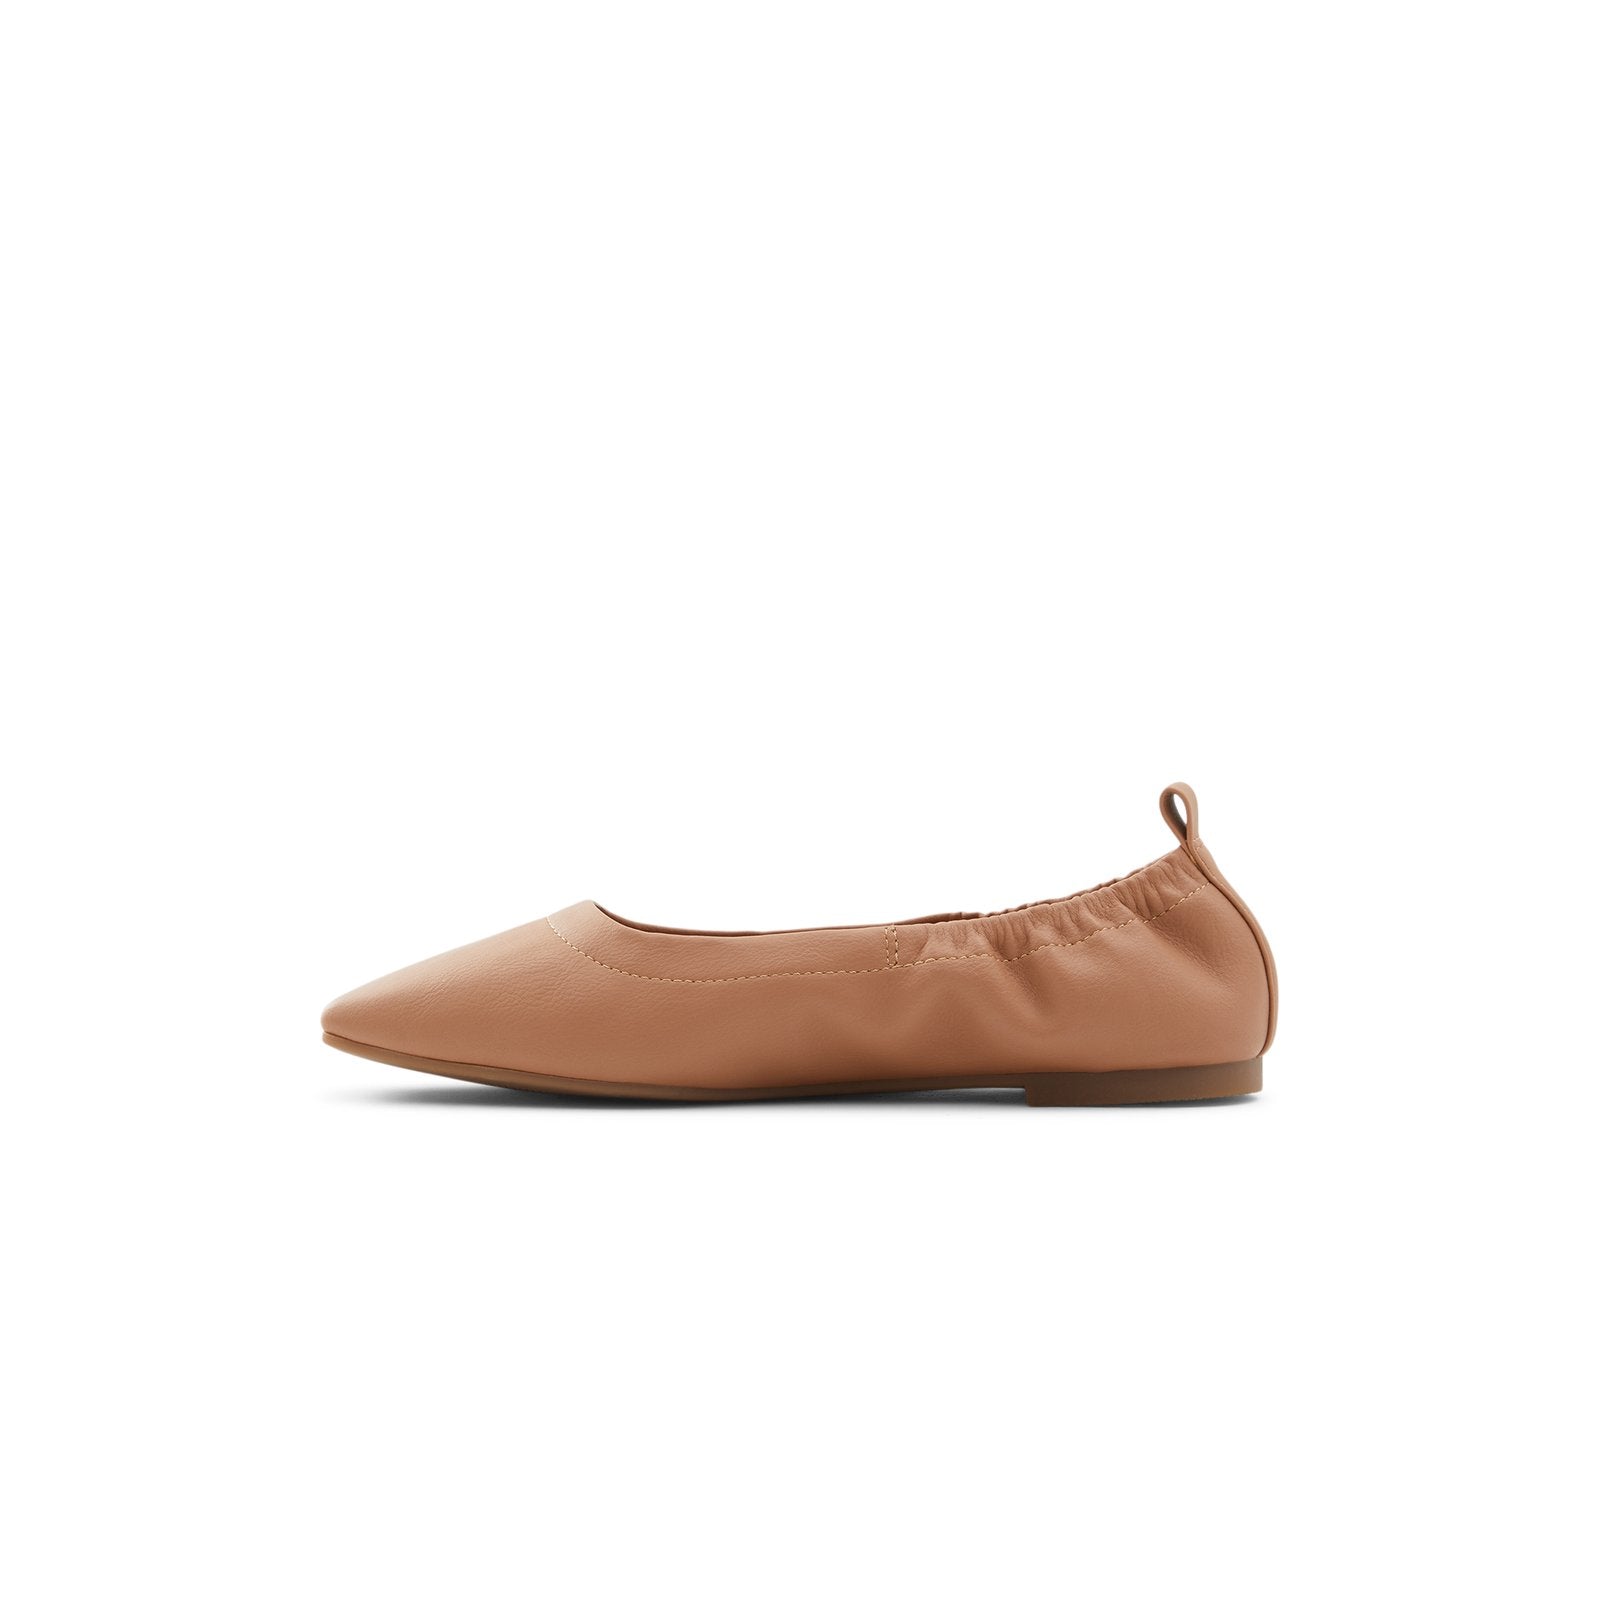 Chenelle Women Shoes - Light Beige - CALL IT SPRING KSA